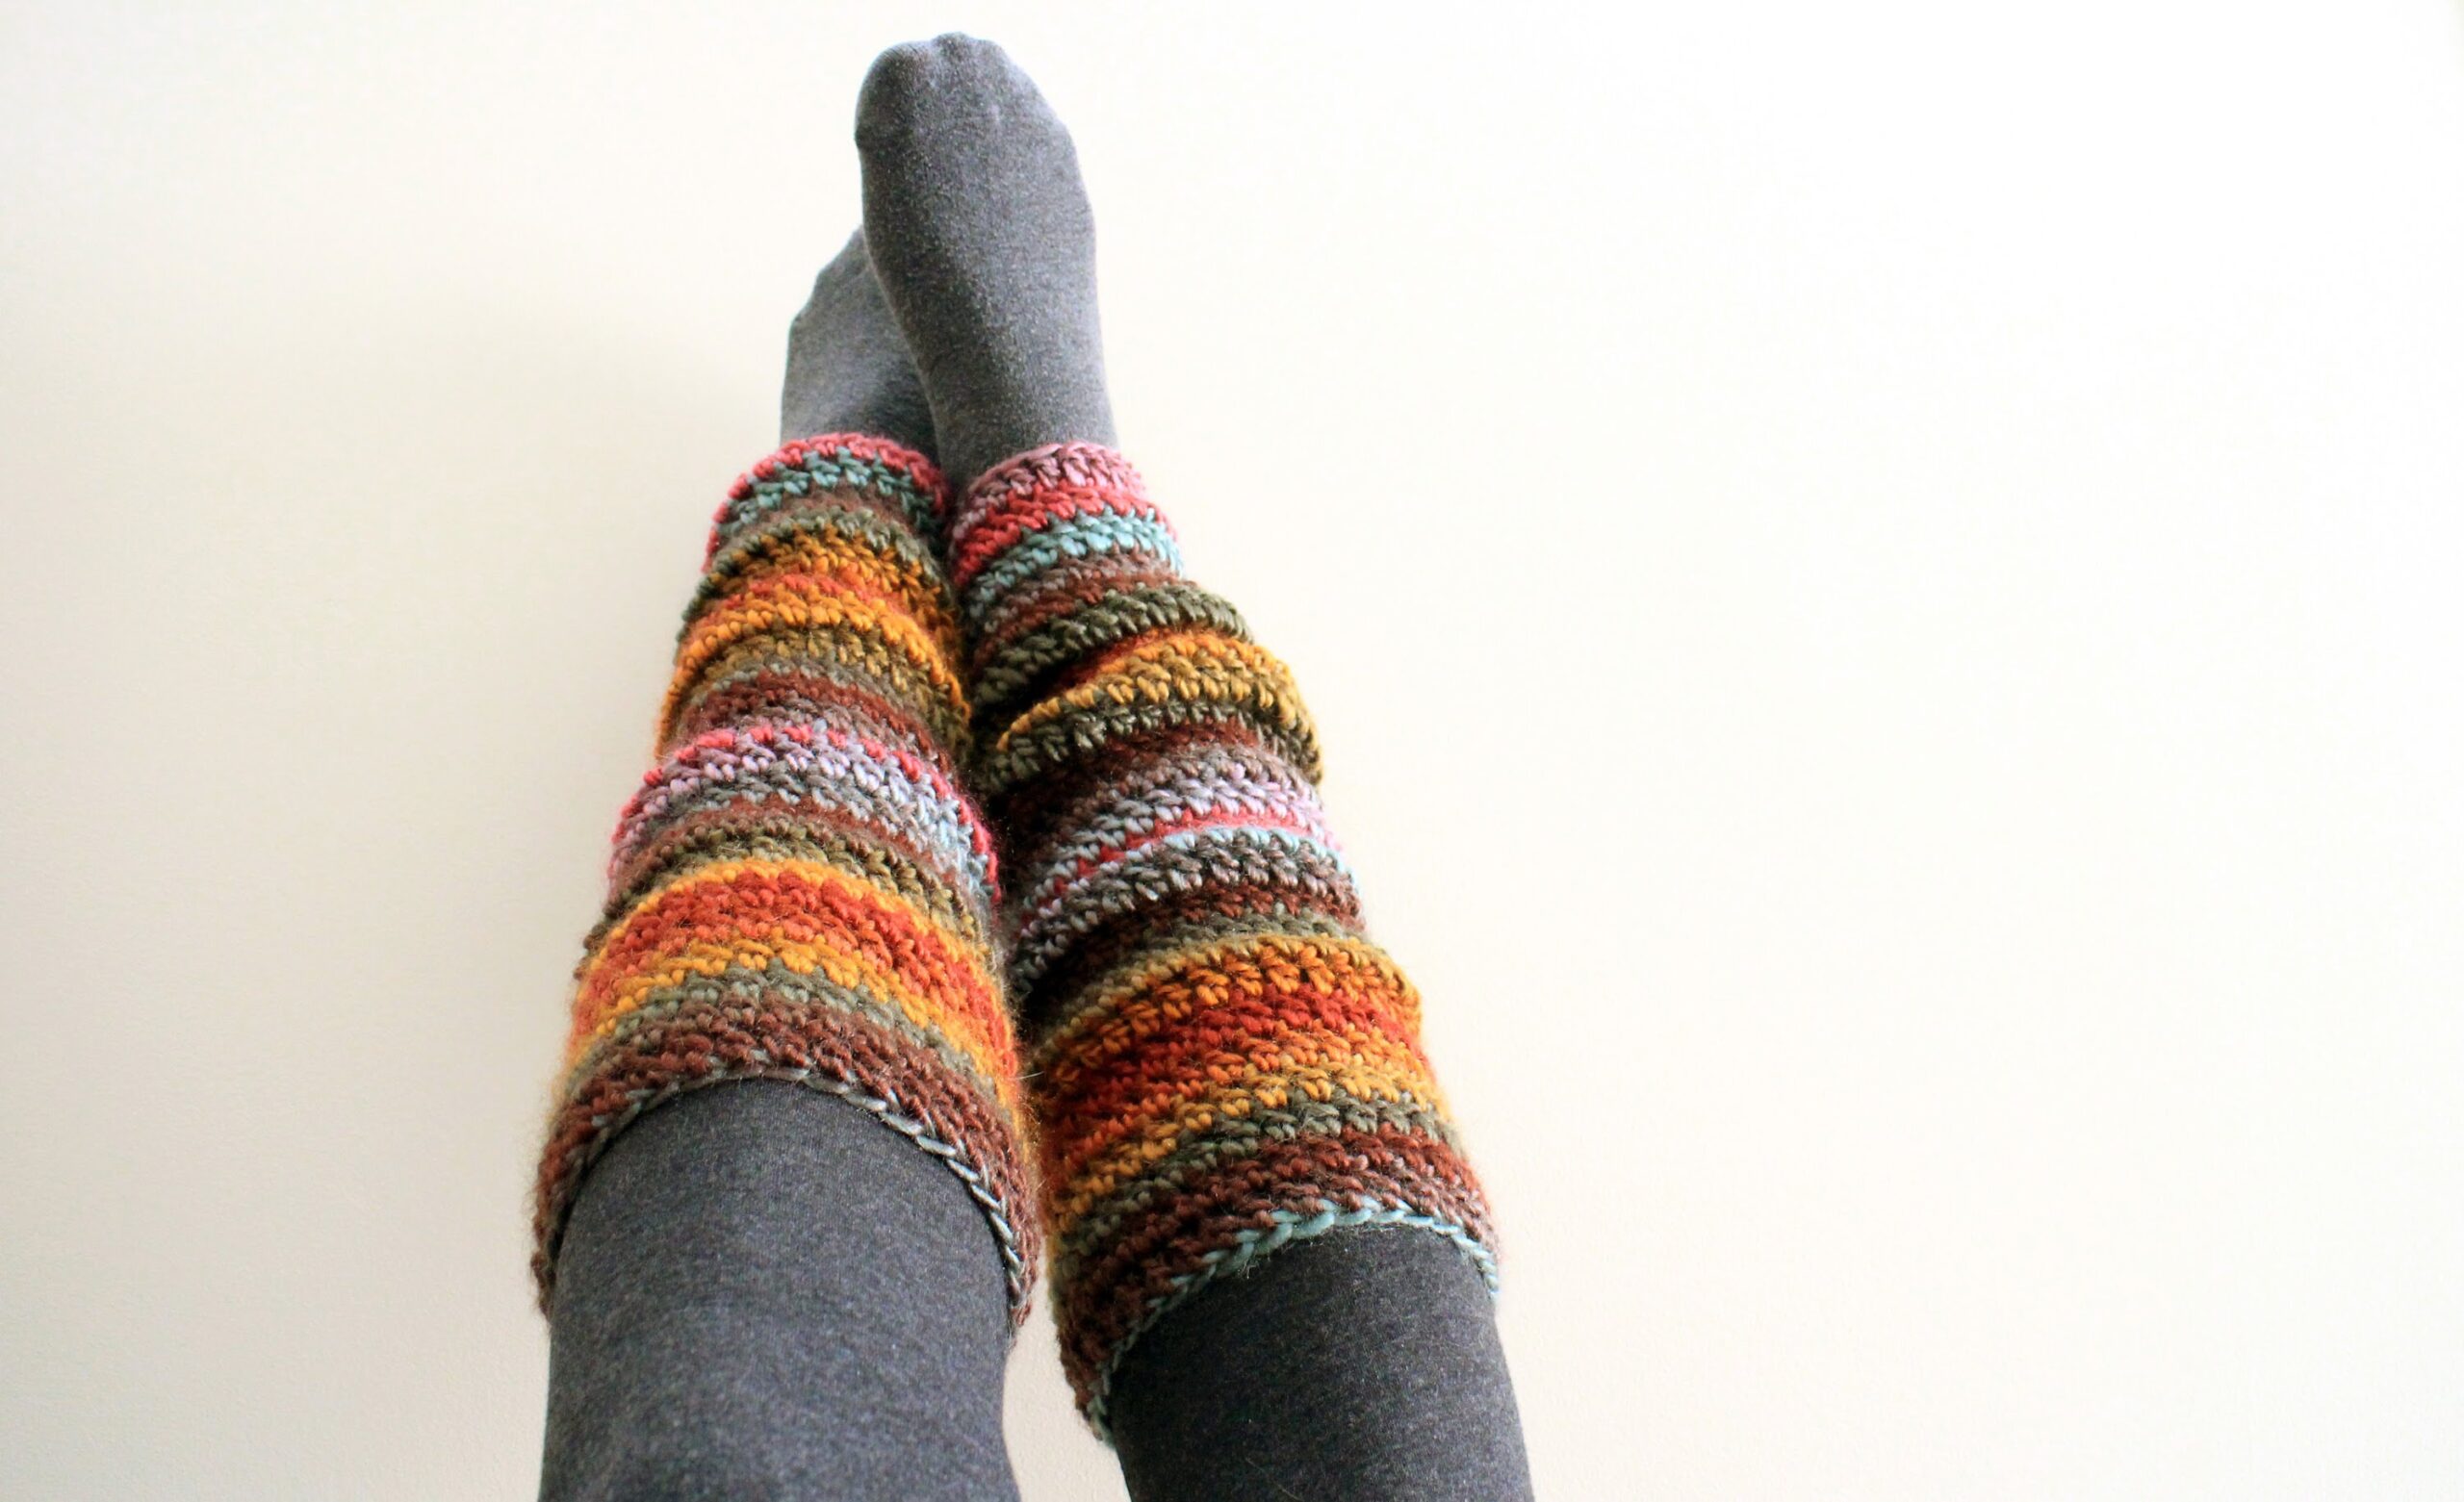 Crochet Leg Warmers – for this Winter
Season